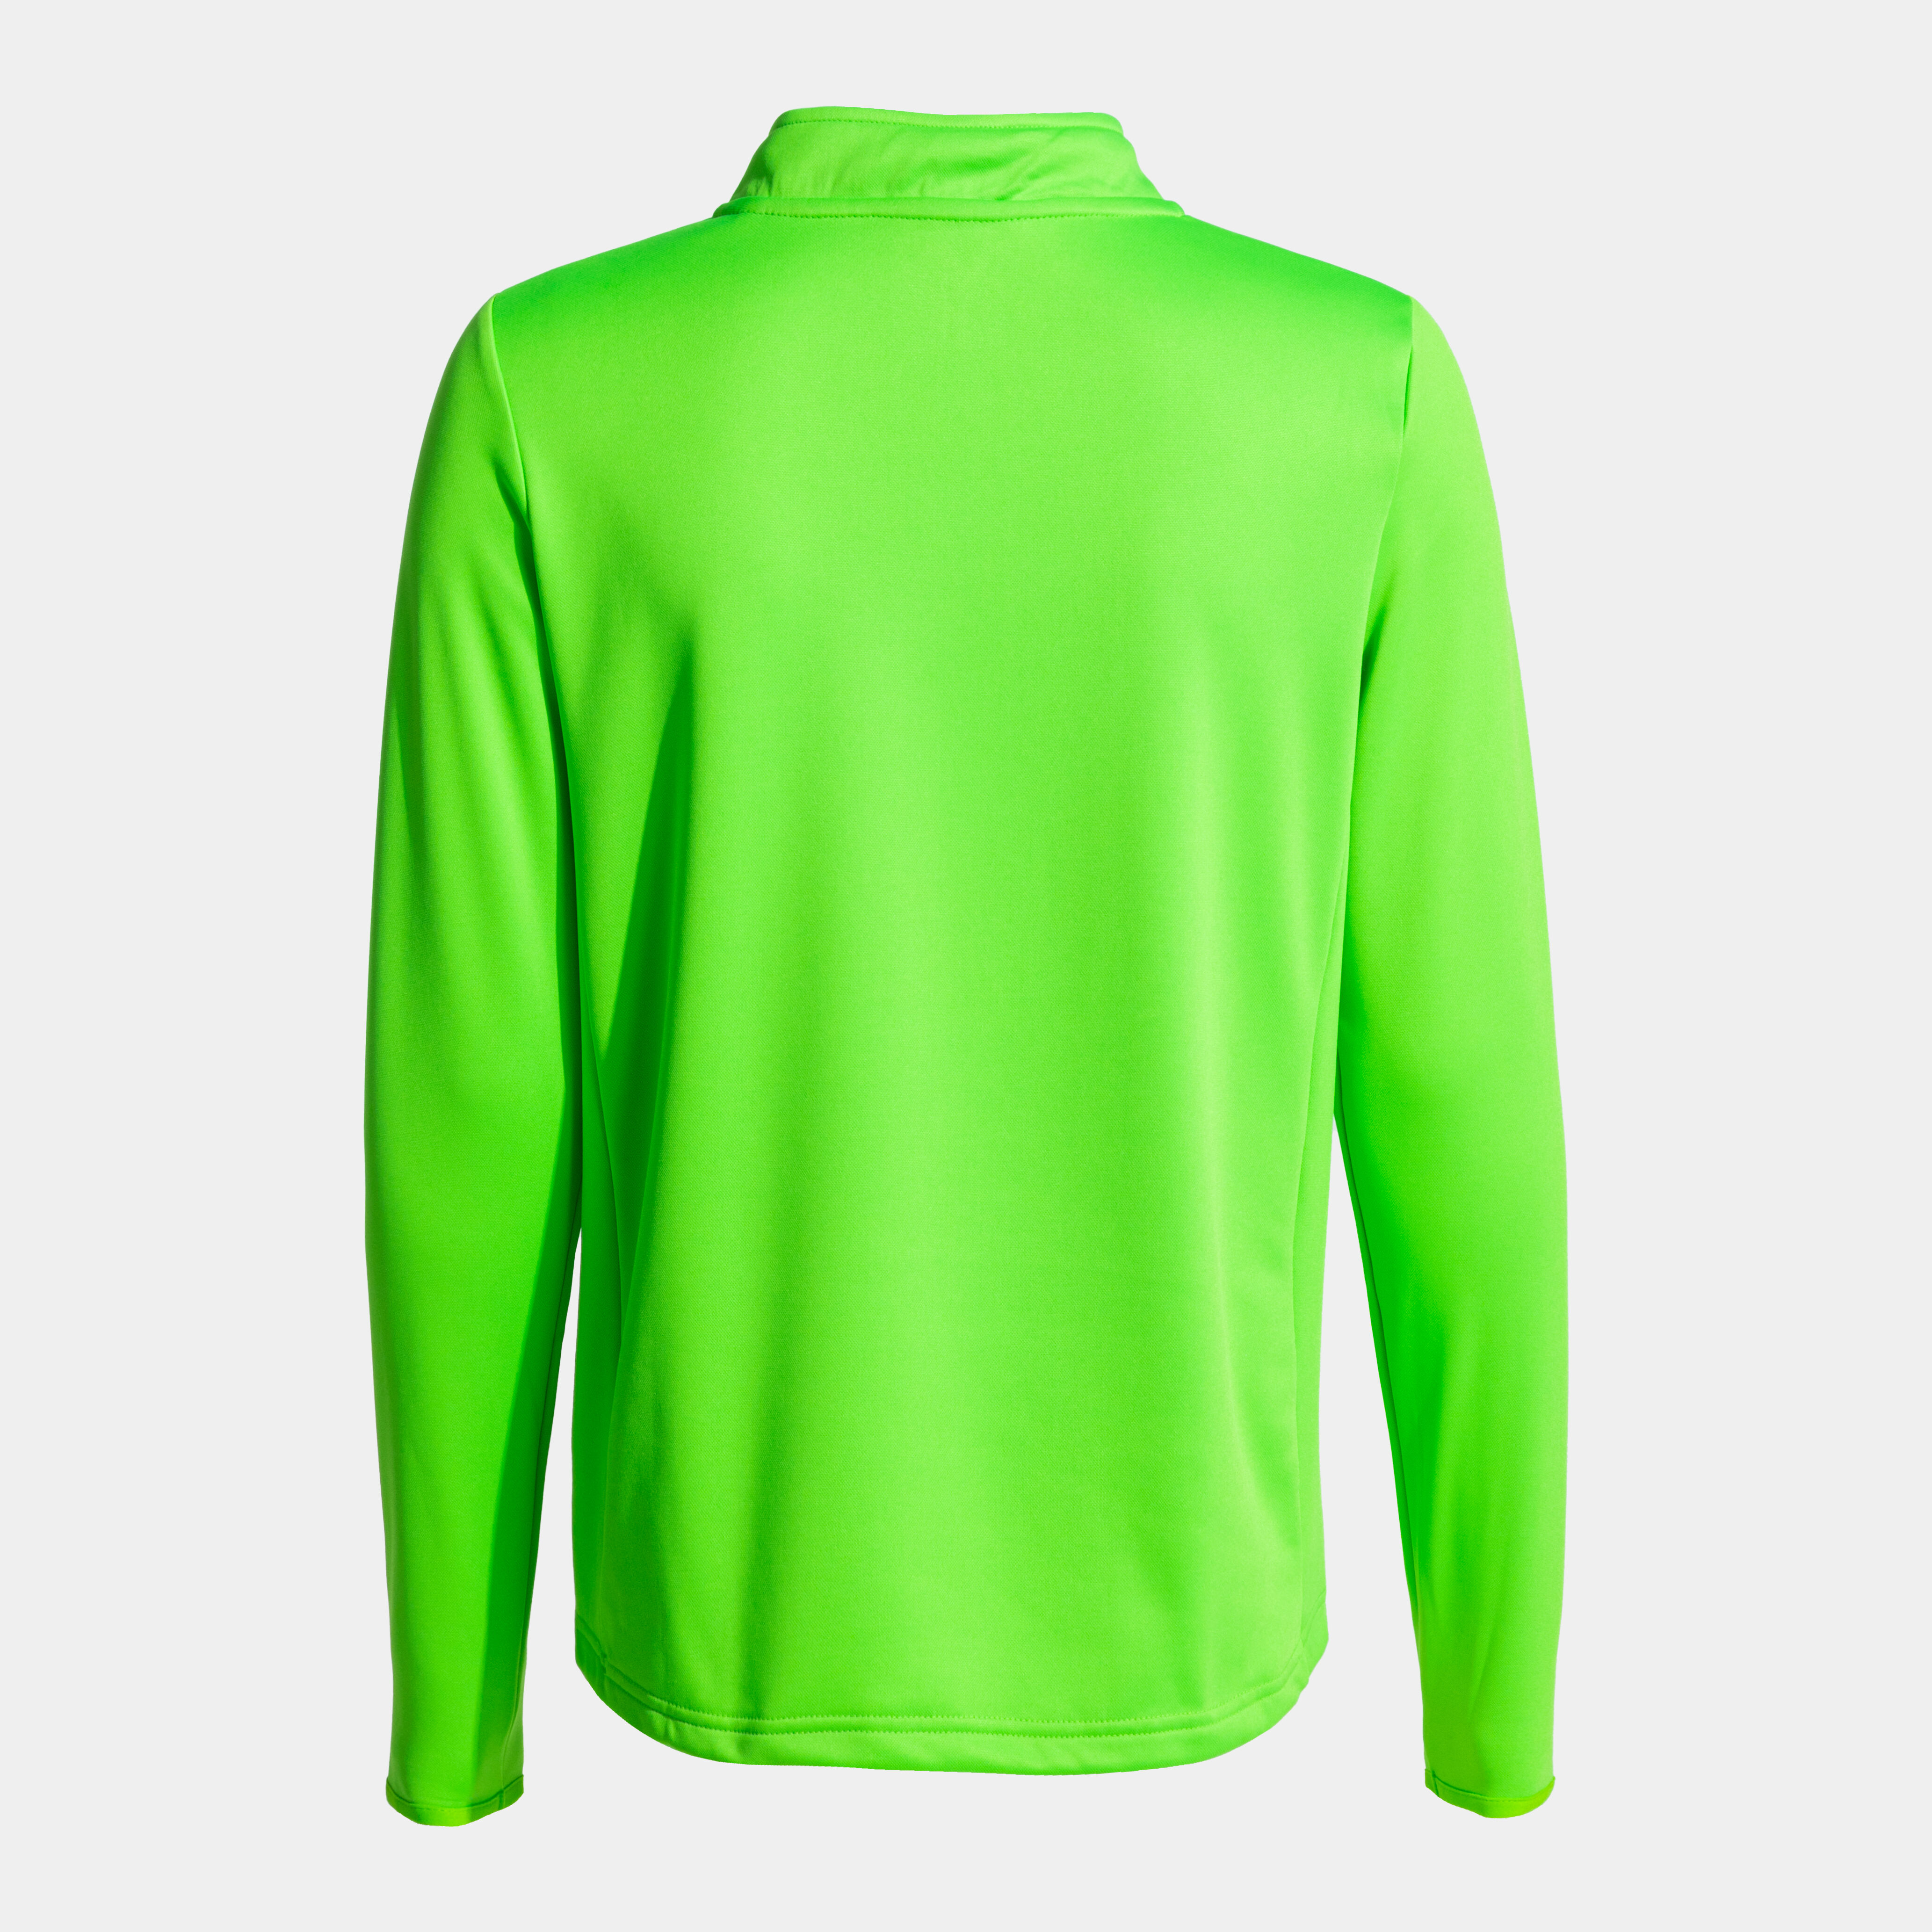 Sweatshirt woman Running Night fluorescent green